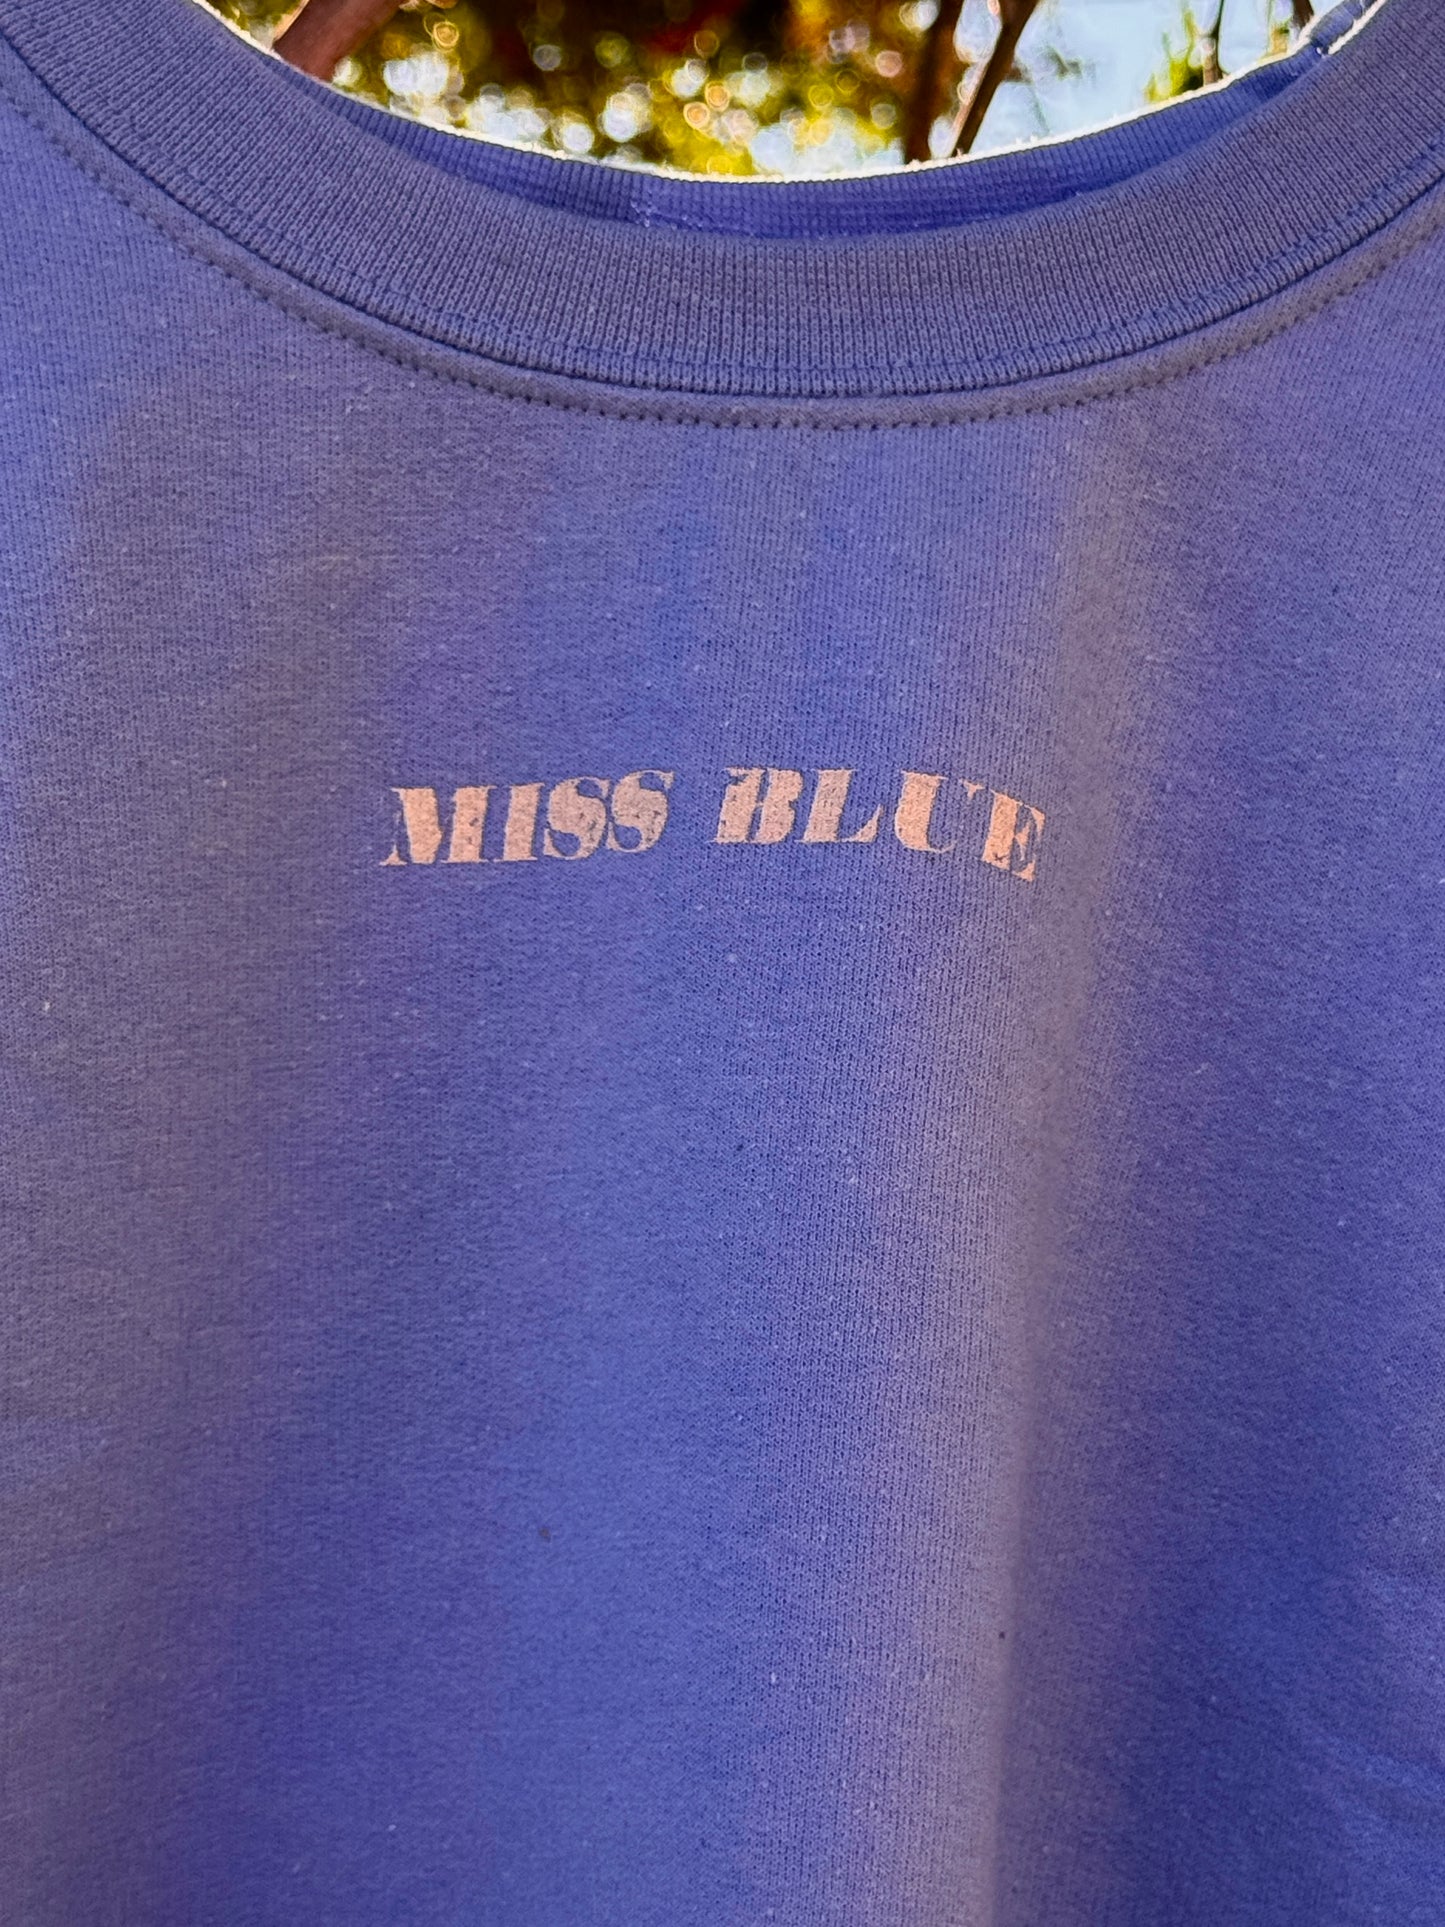 miss blue..Sweater